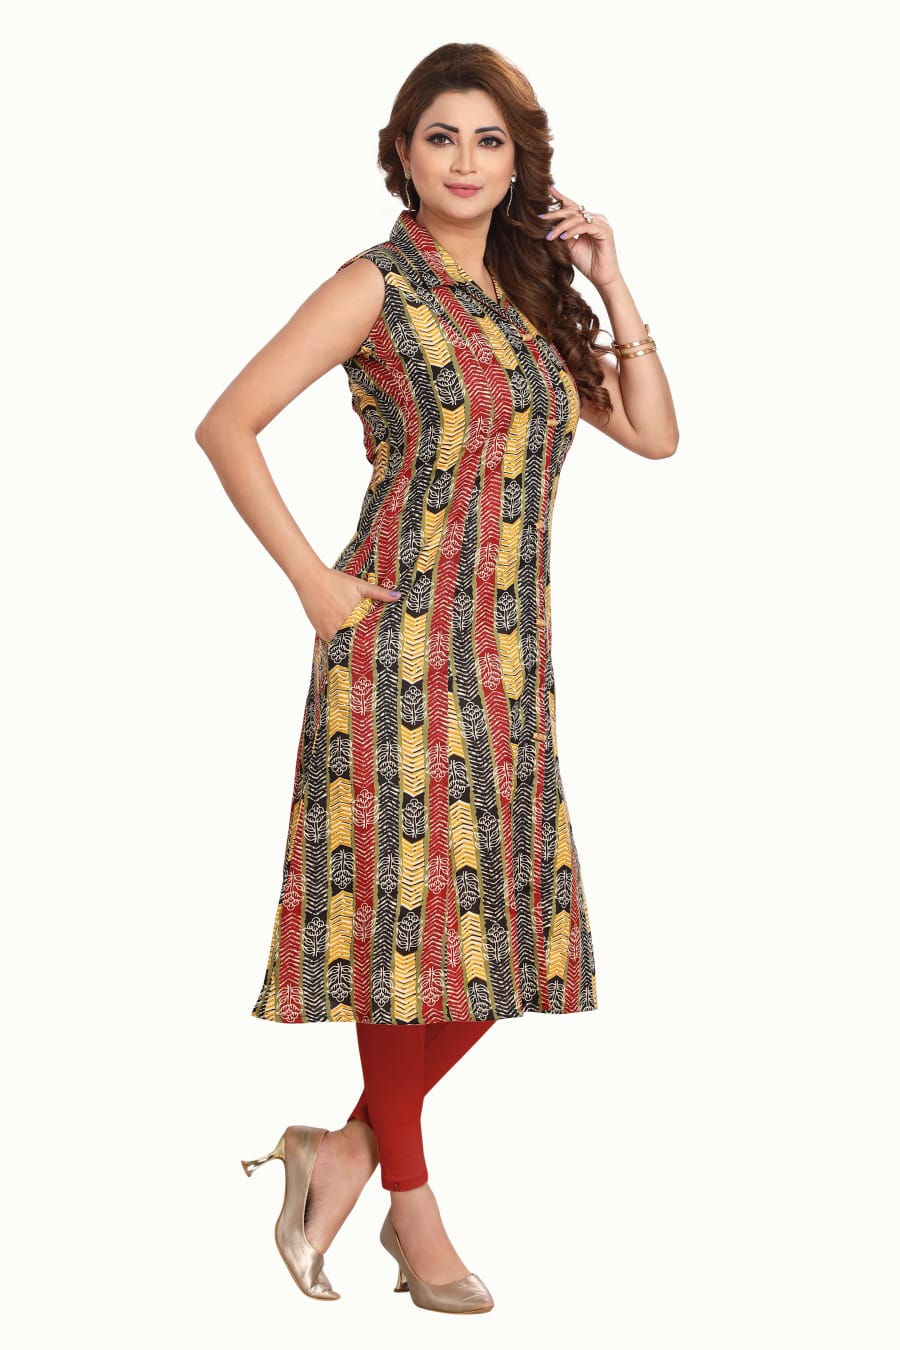 Cotton kurti sleeveless , A-line pattern with collar neck